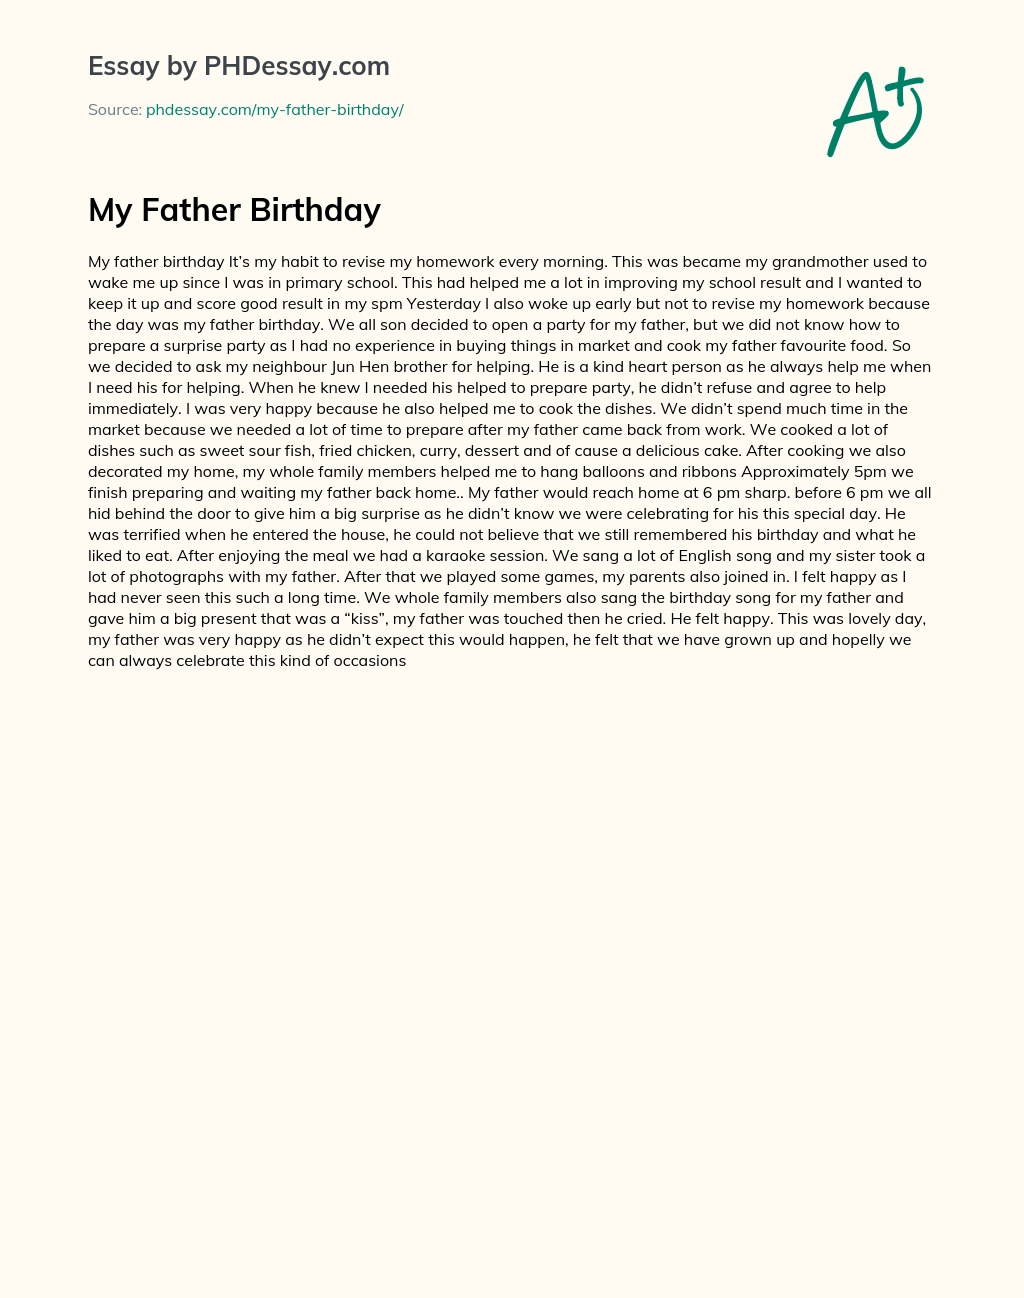 My Father Birthday essay